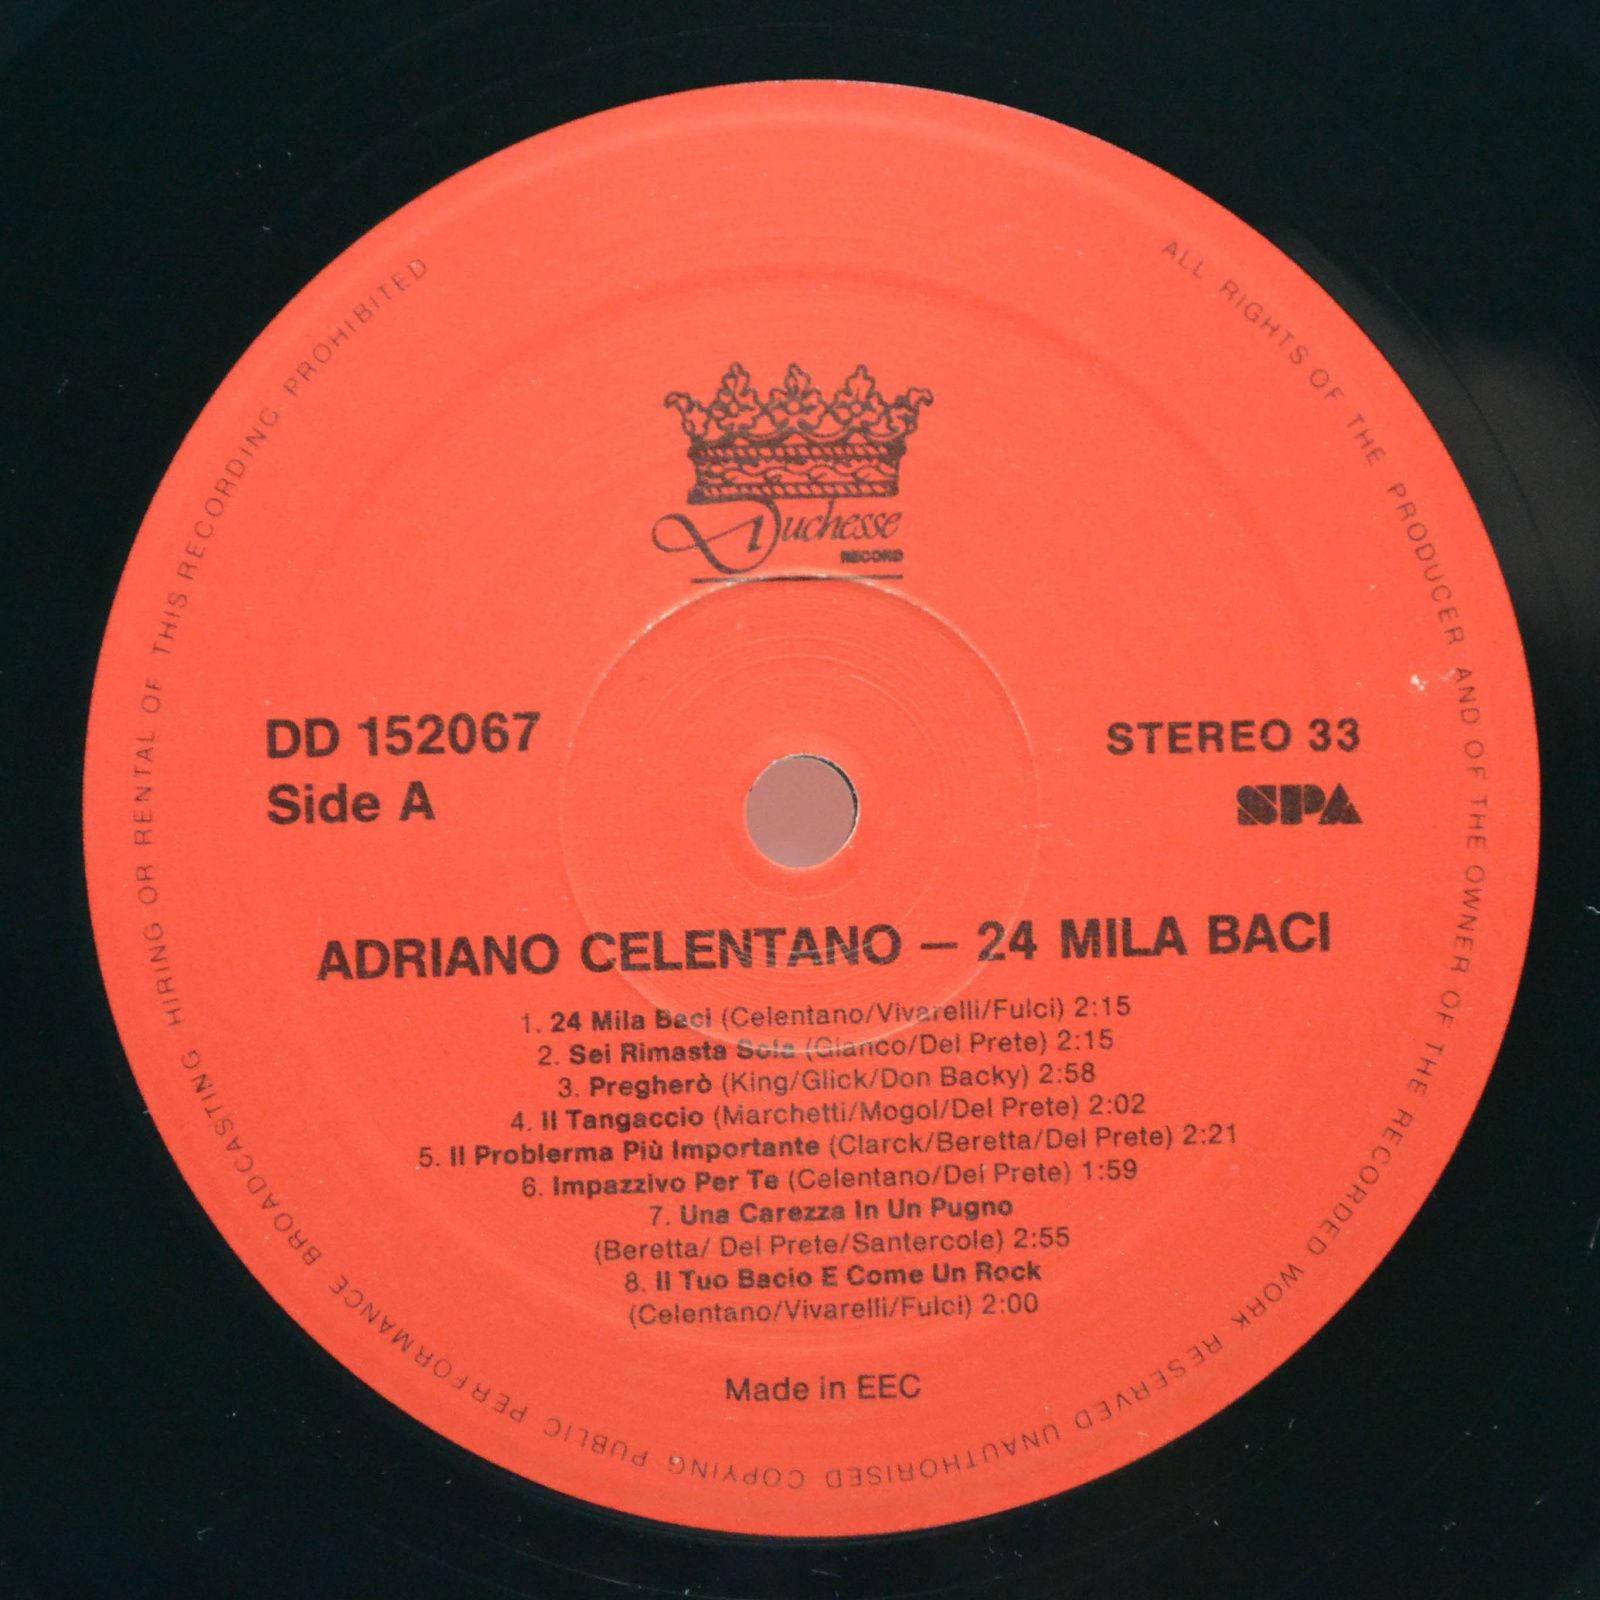 Adriano Celentano — 24 Mila Baci, 1989